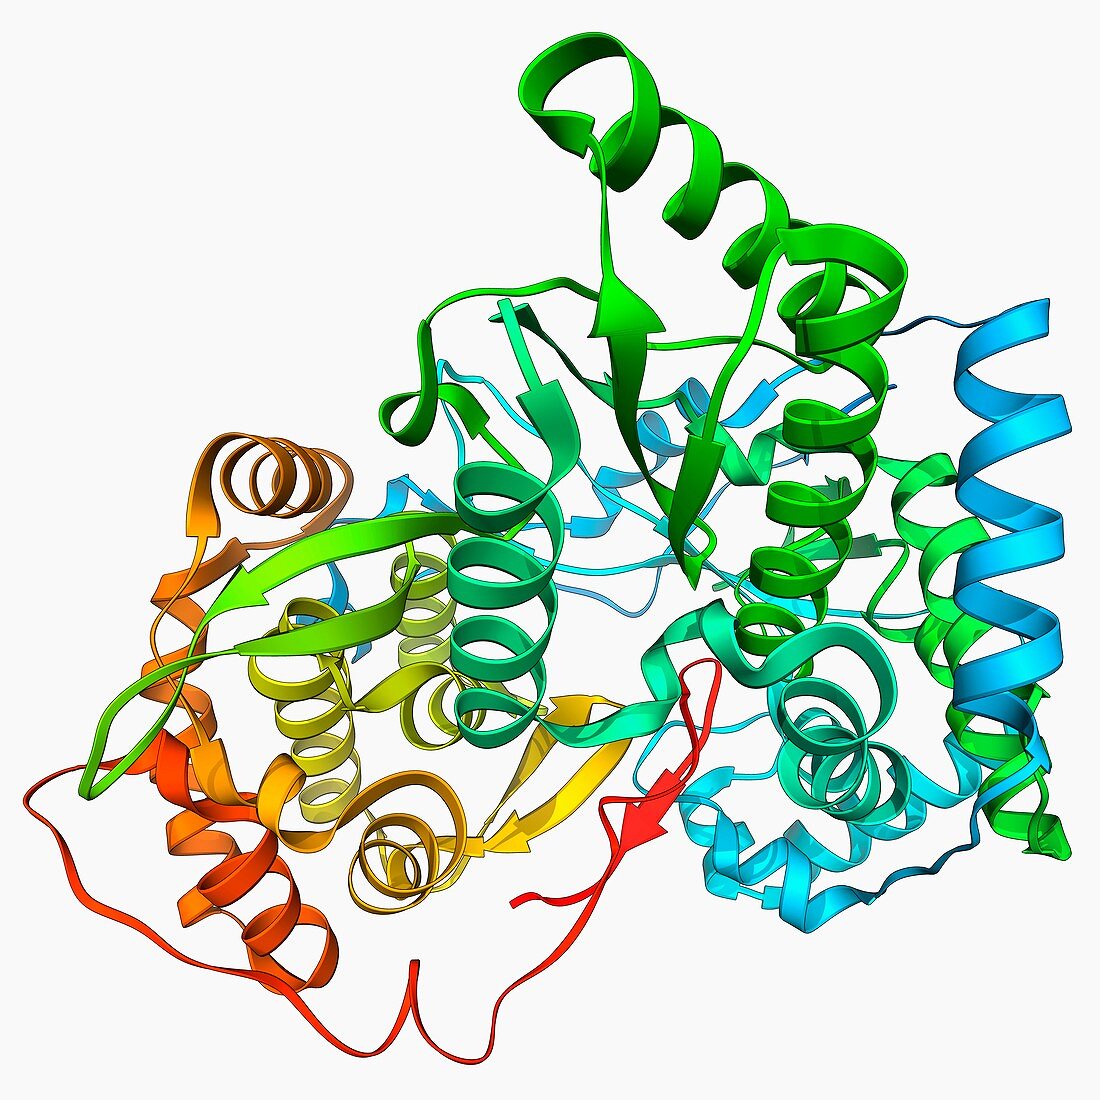 Hepatitis C polymerase enzyme